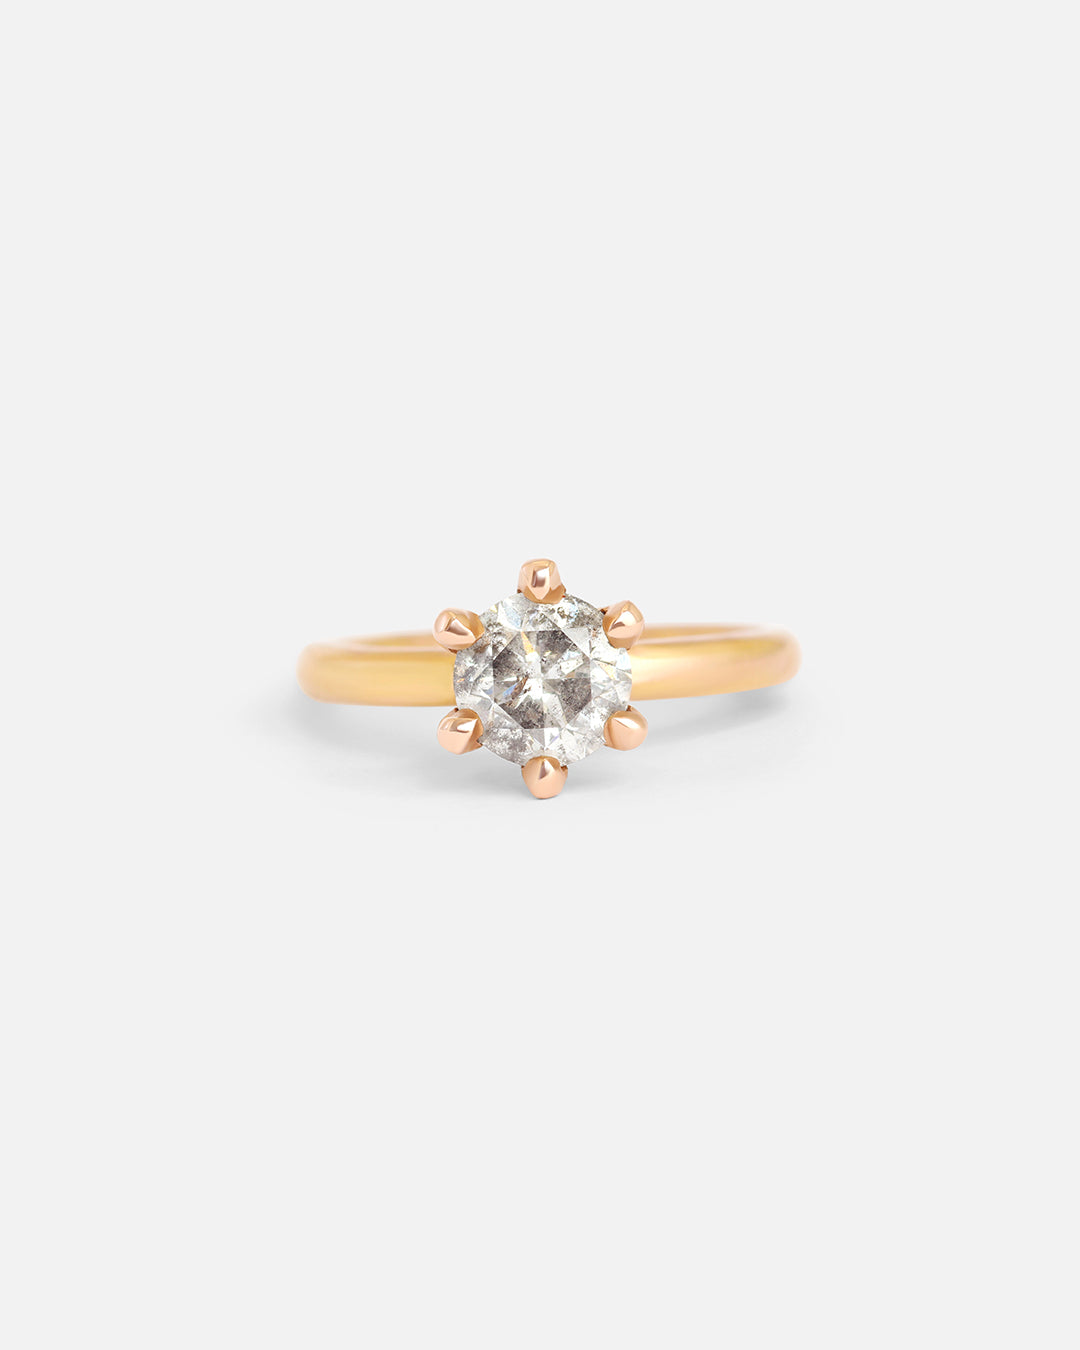 Iris / Salt + Pepper Ring By Vena Amoris in Engagement Rings Category